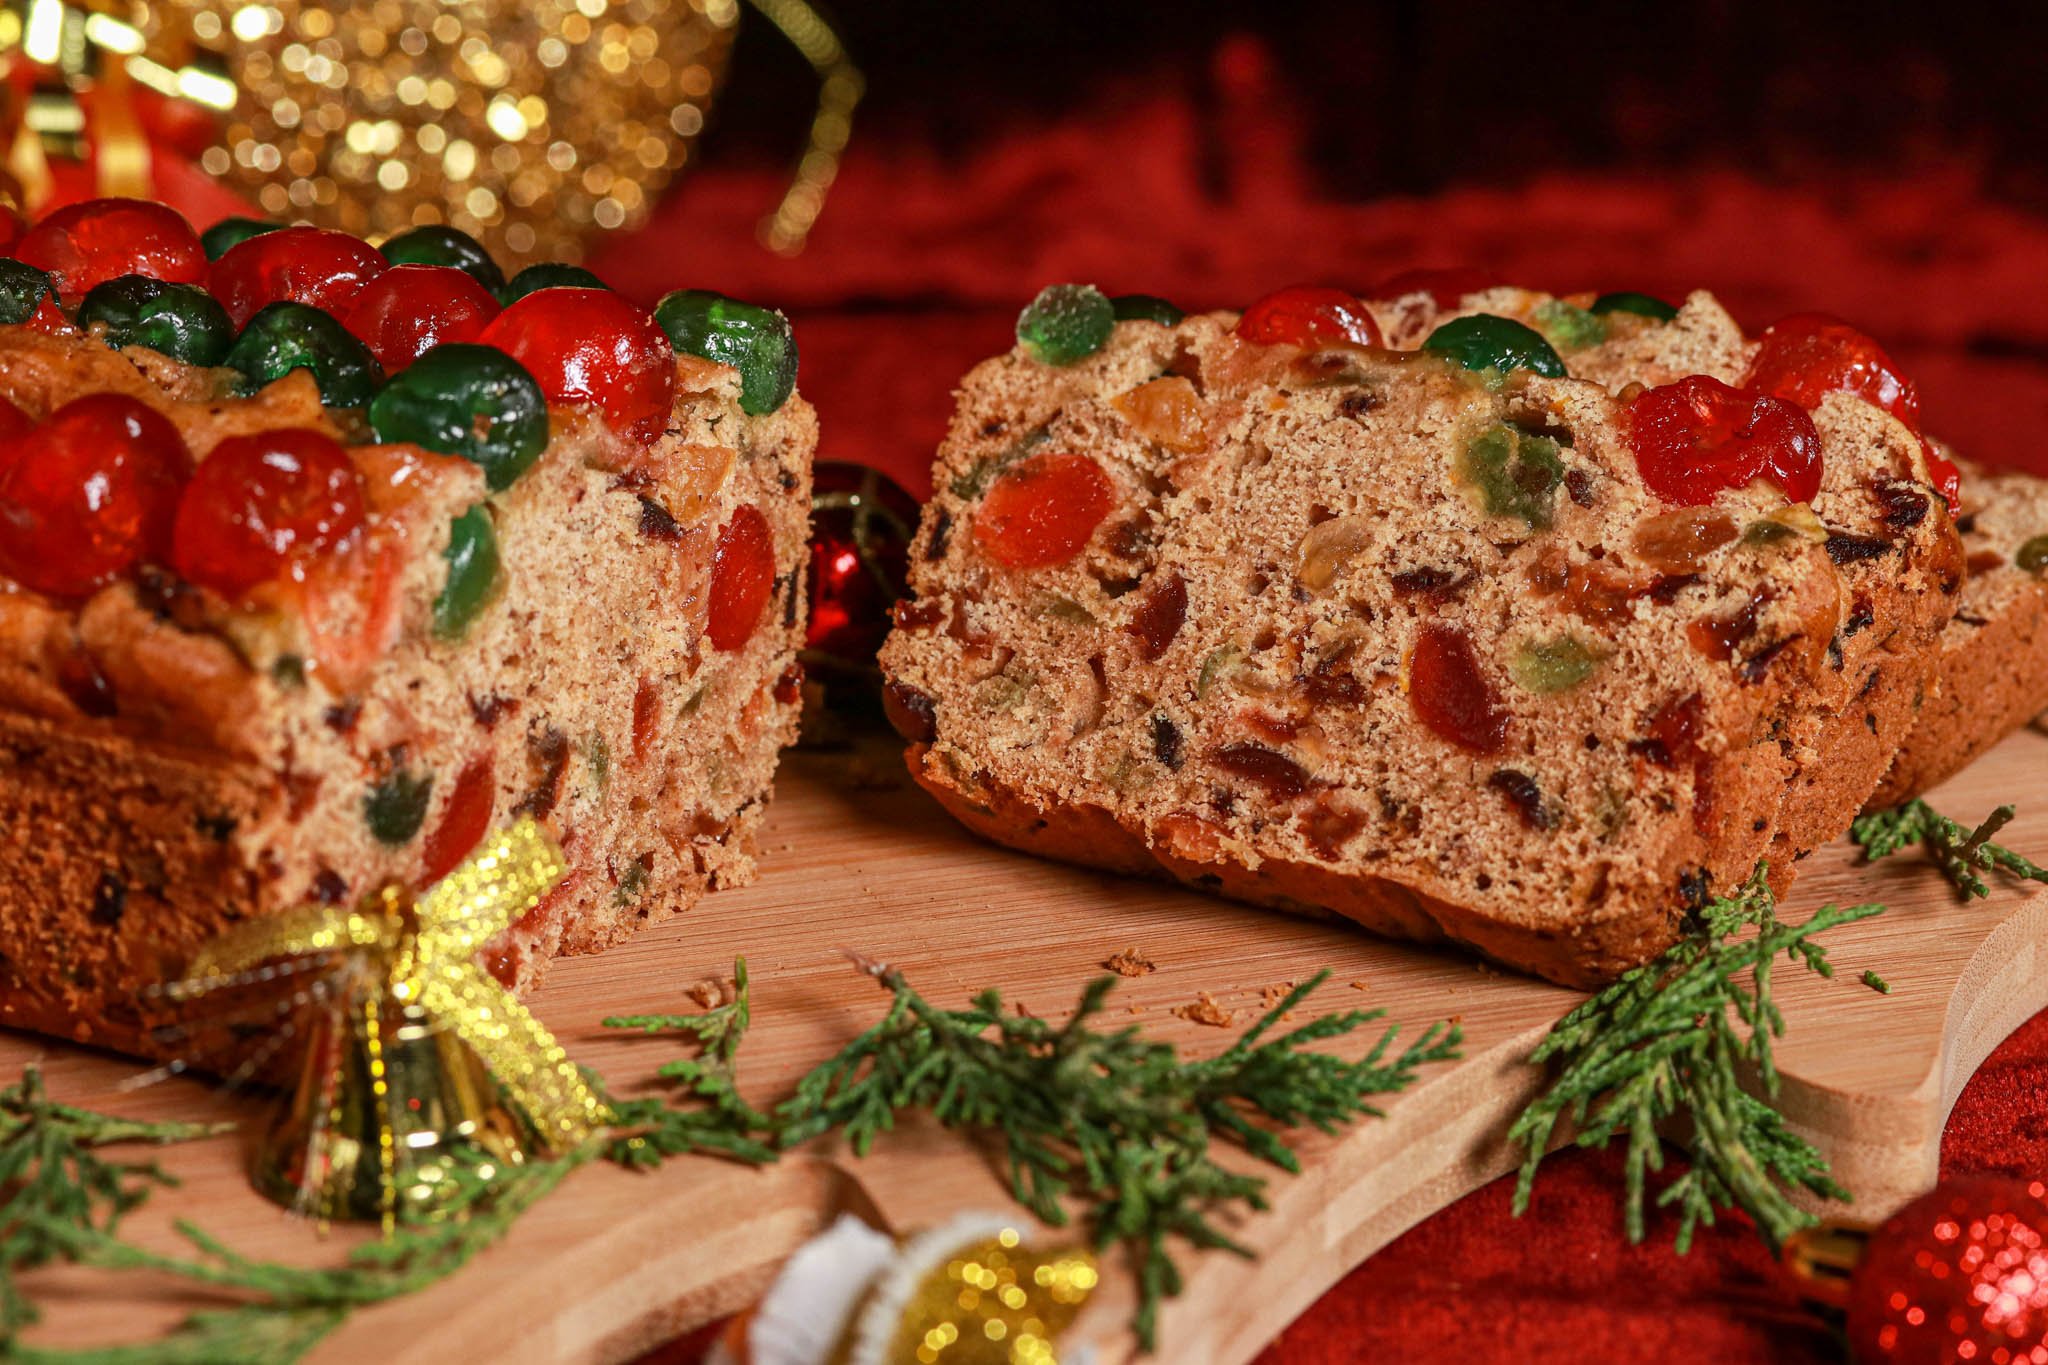 Gluten-free Fruit Cake on Christmas Wooden Board